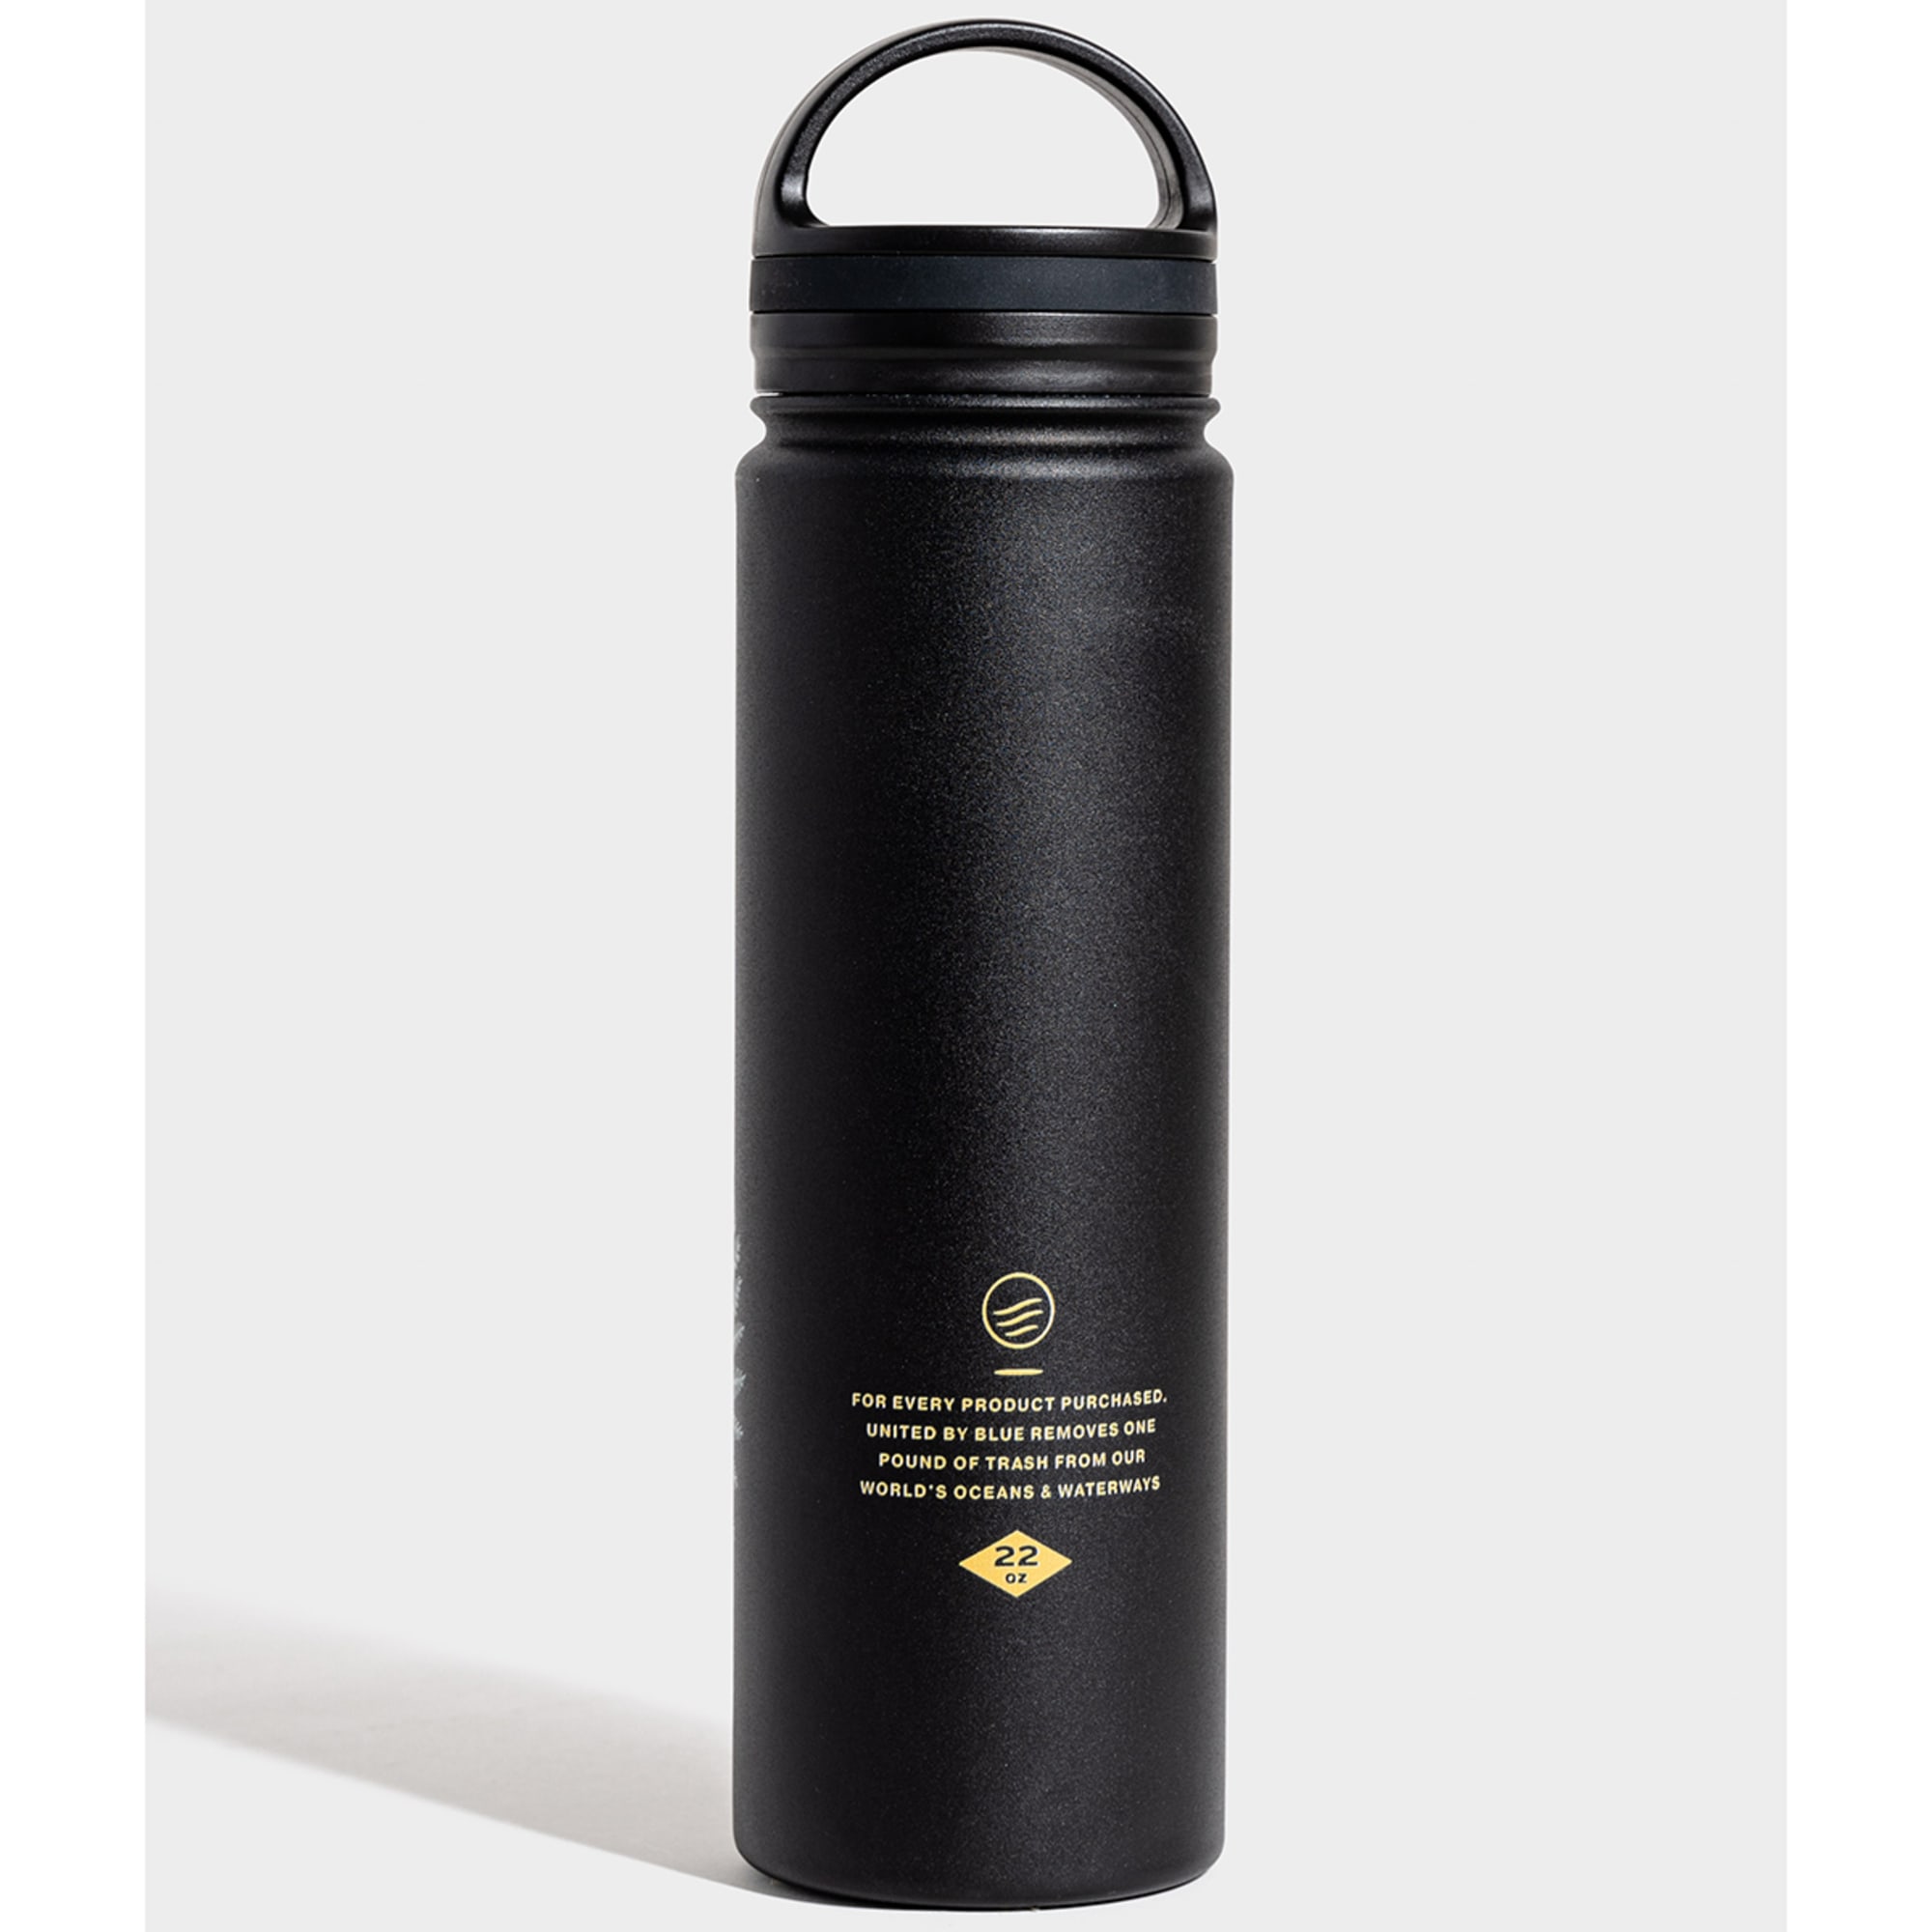 Meshbottle with Glass Top - Midnight Black - 32 oz — Meshbottles -  Plastic-free Water Bottles